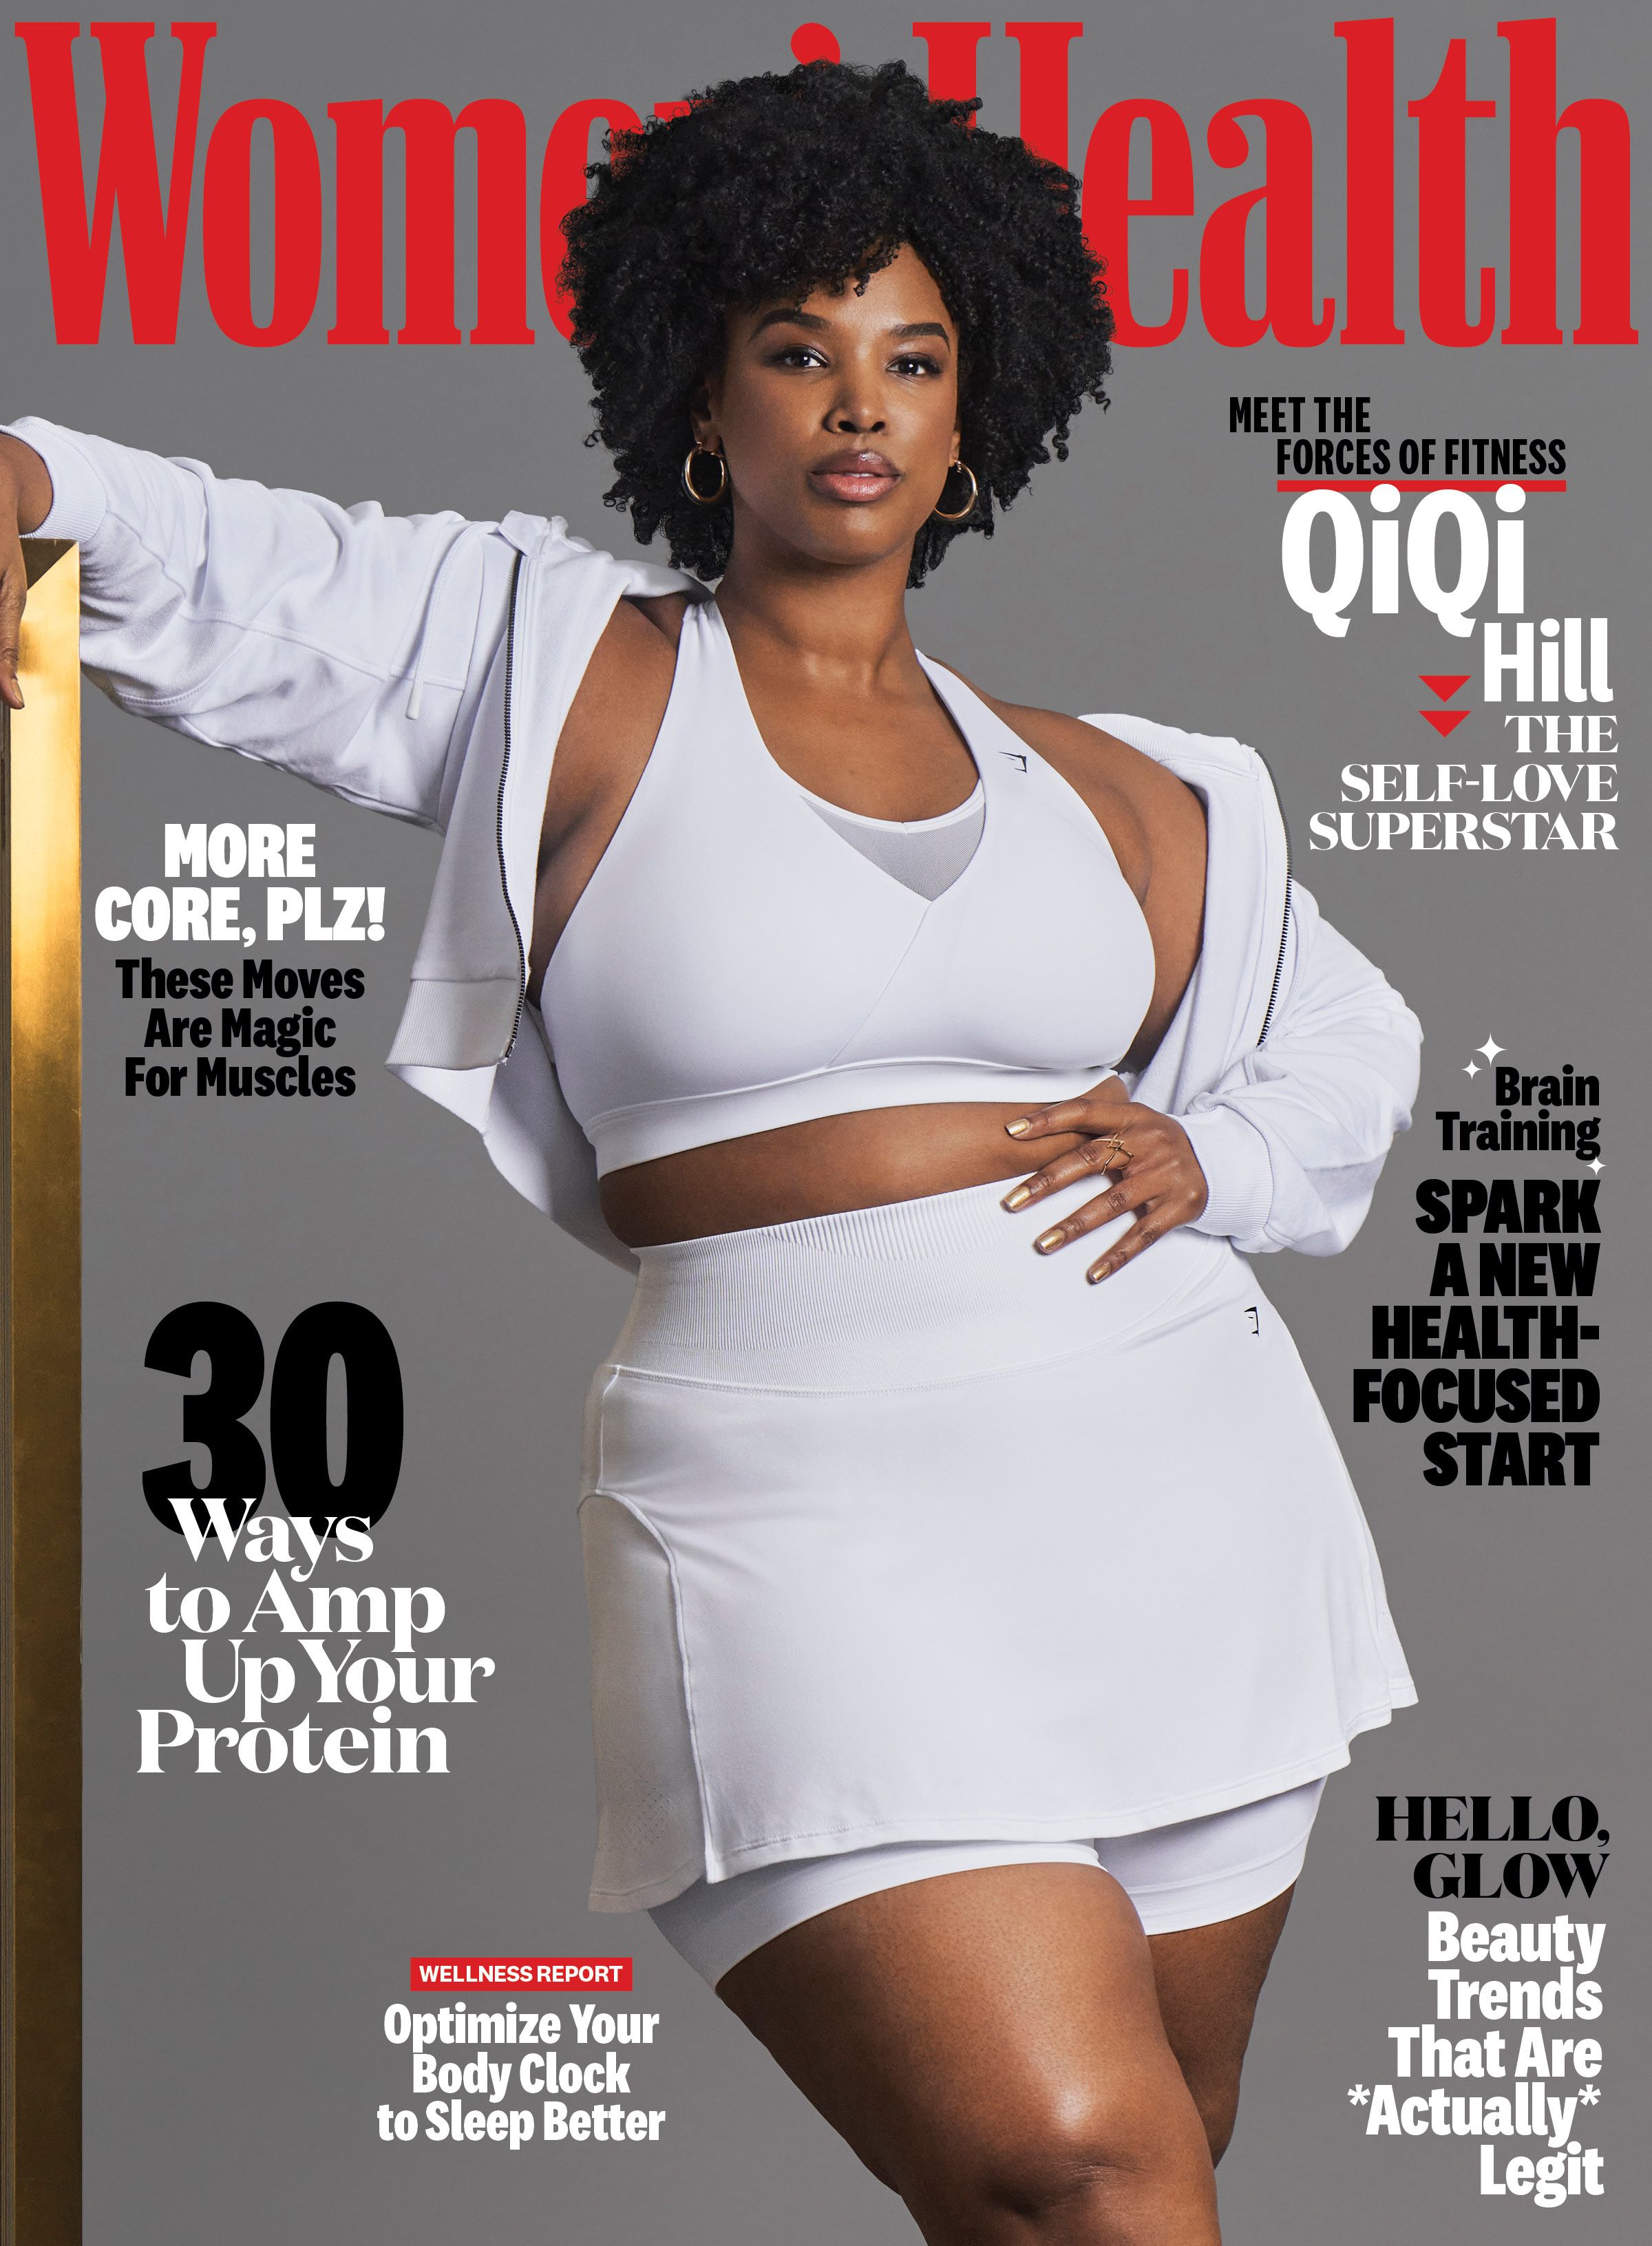 Women's Fitness magazine added - Women's Fitness magazine